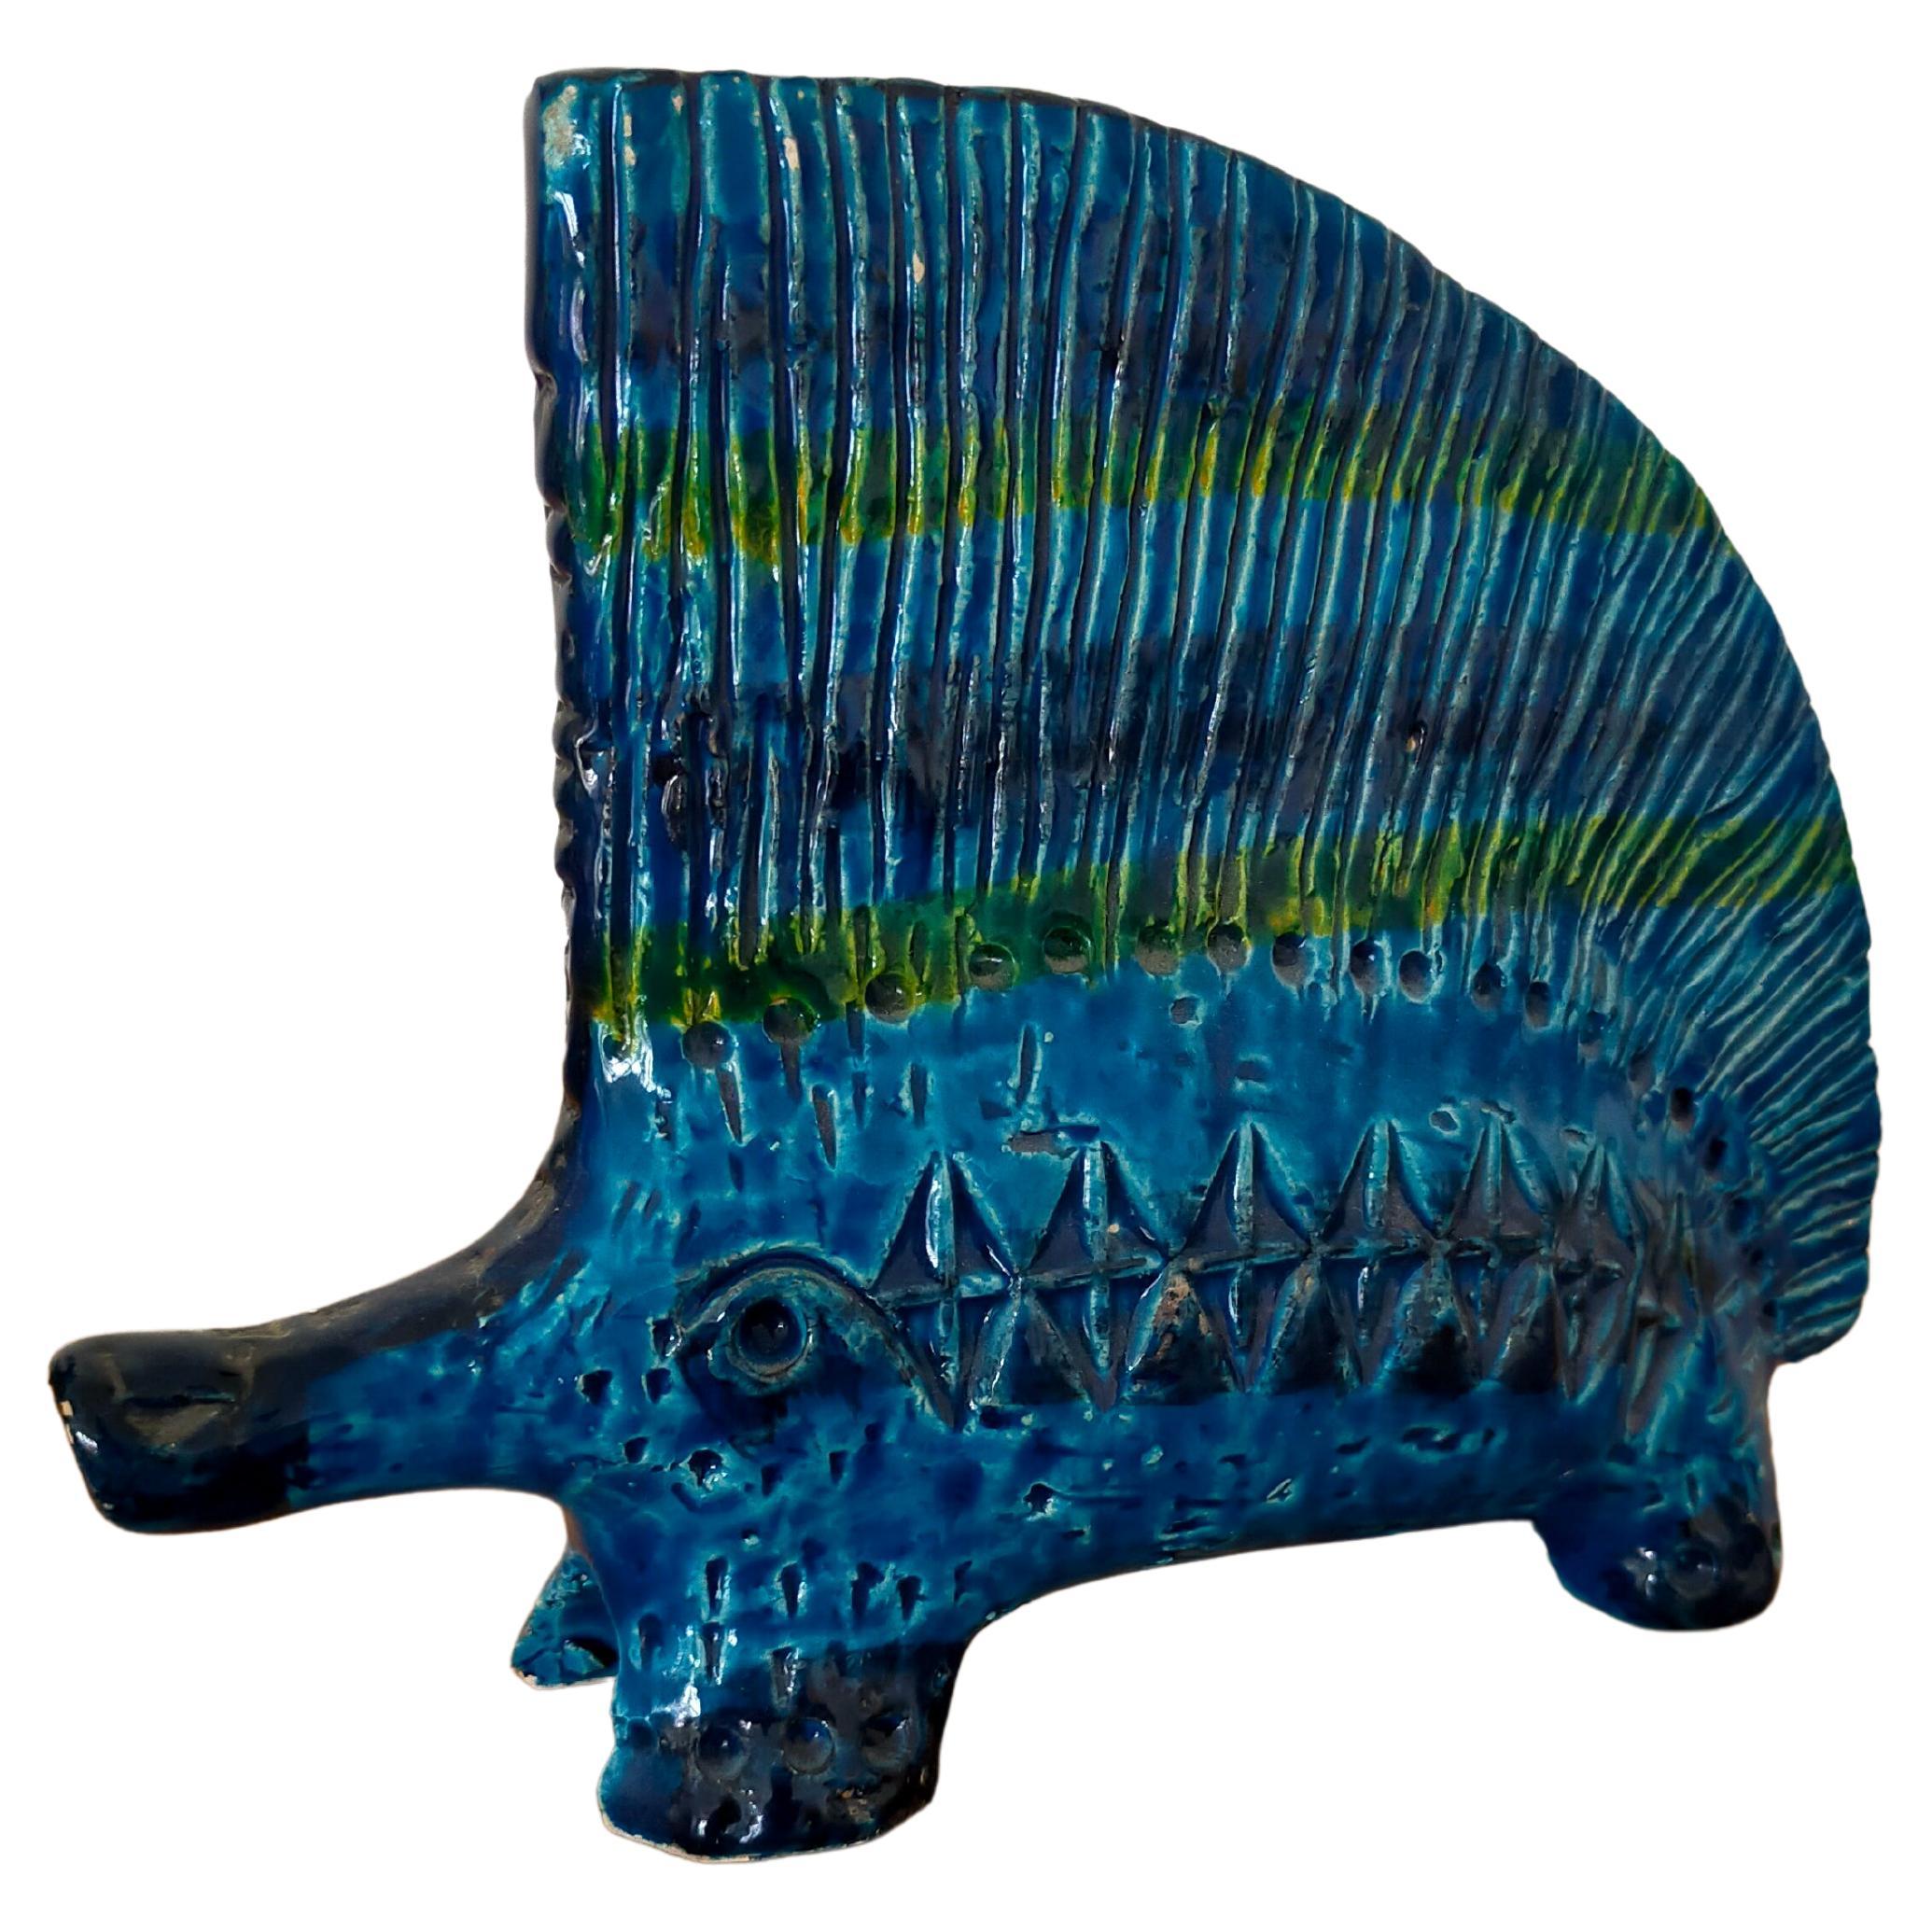 Ceramic Porcupine of Rimini Blu Collection by Aldo Londi for Bitossi